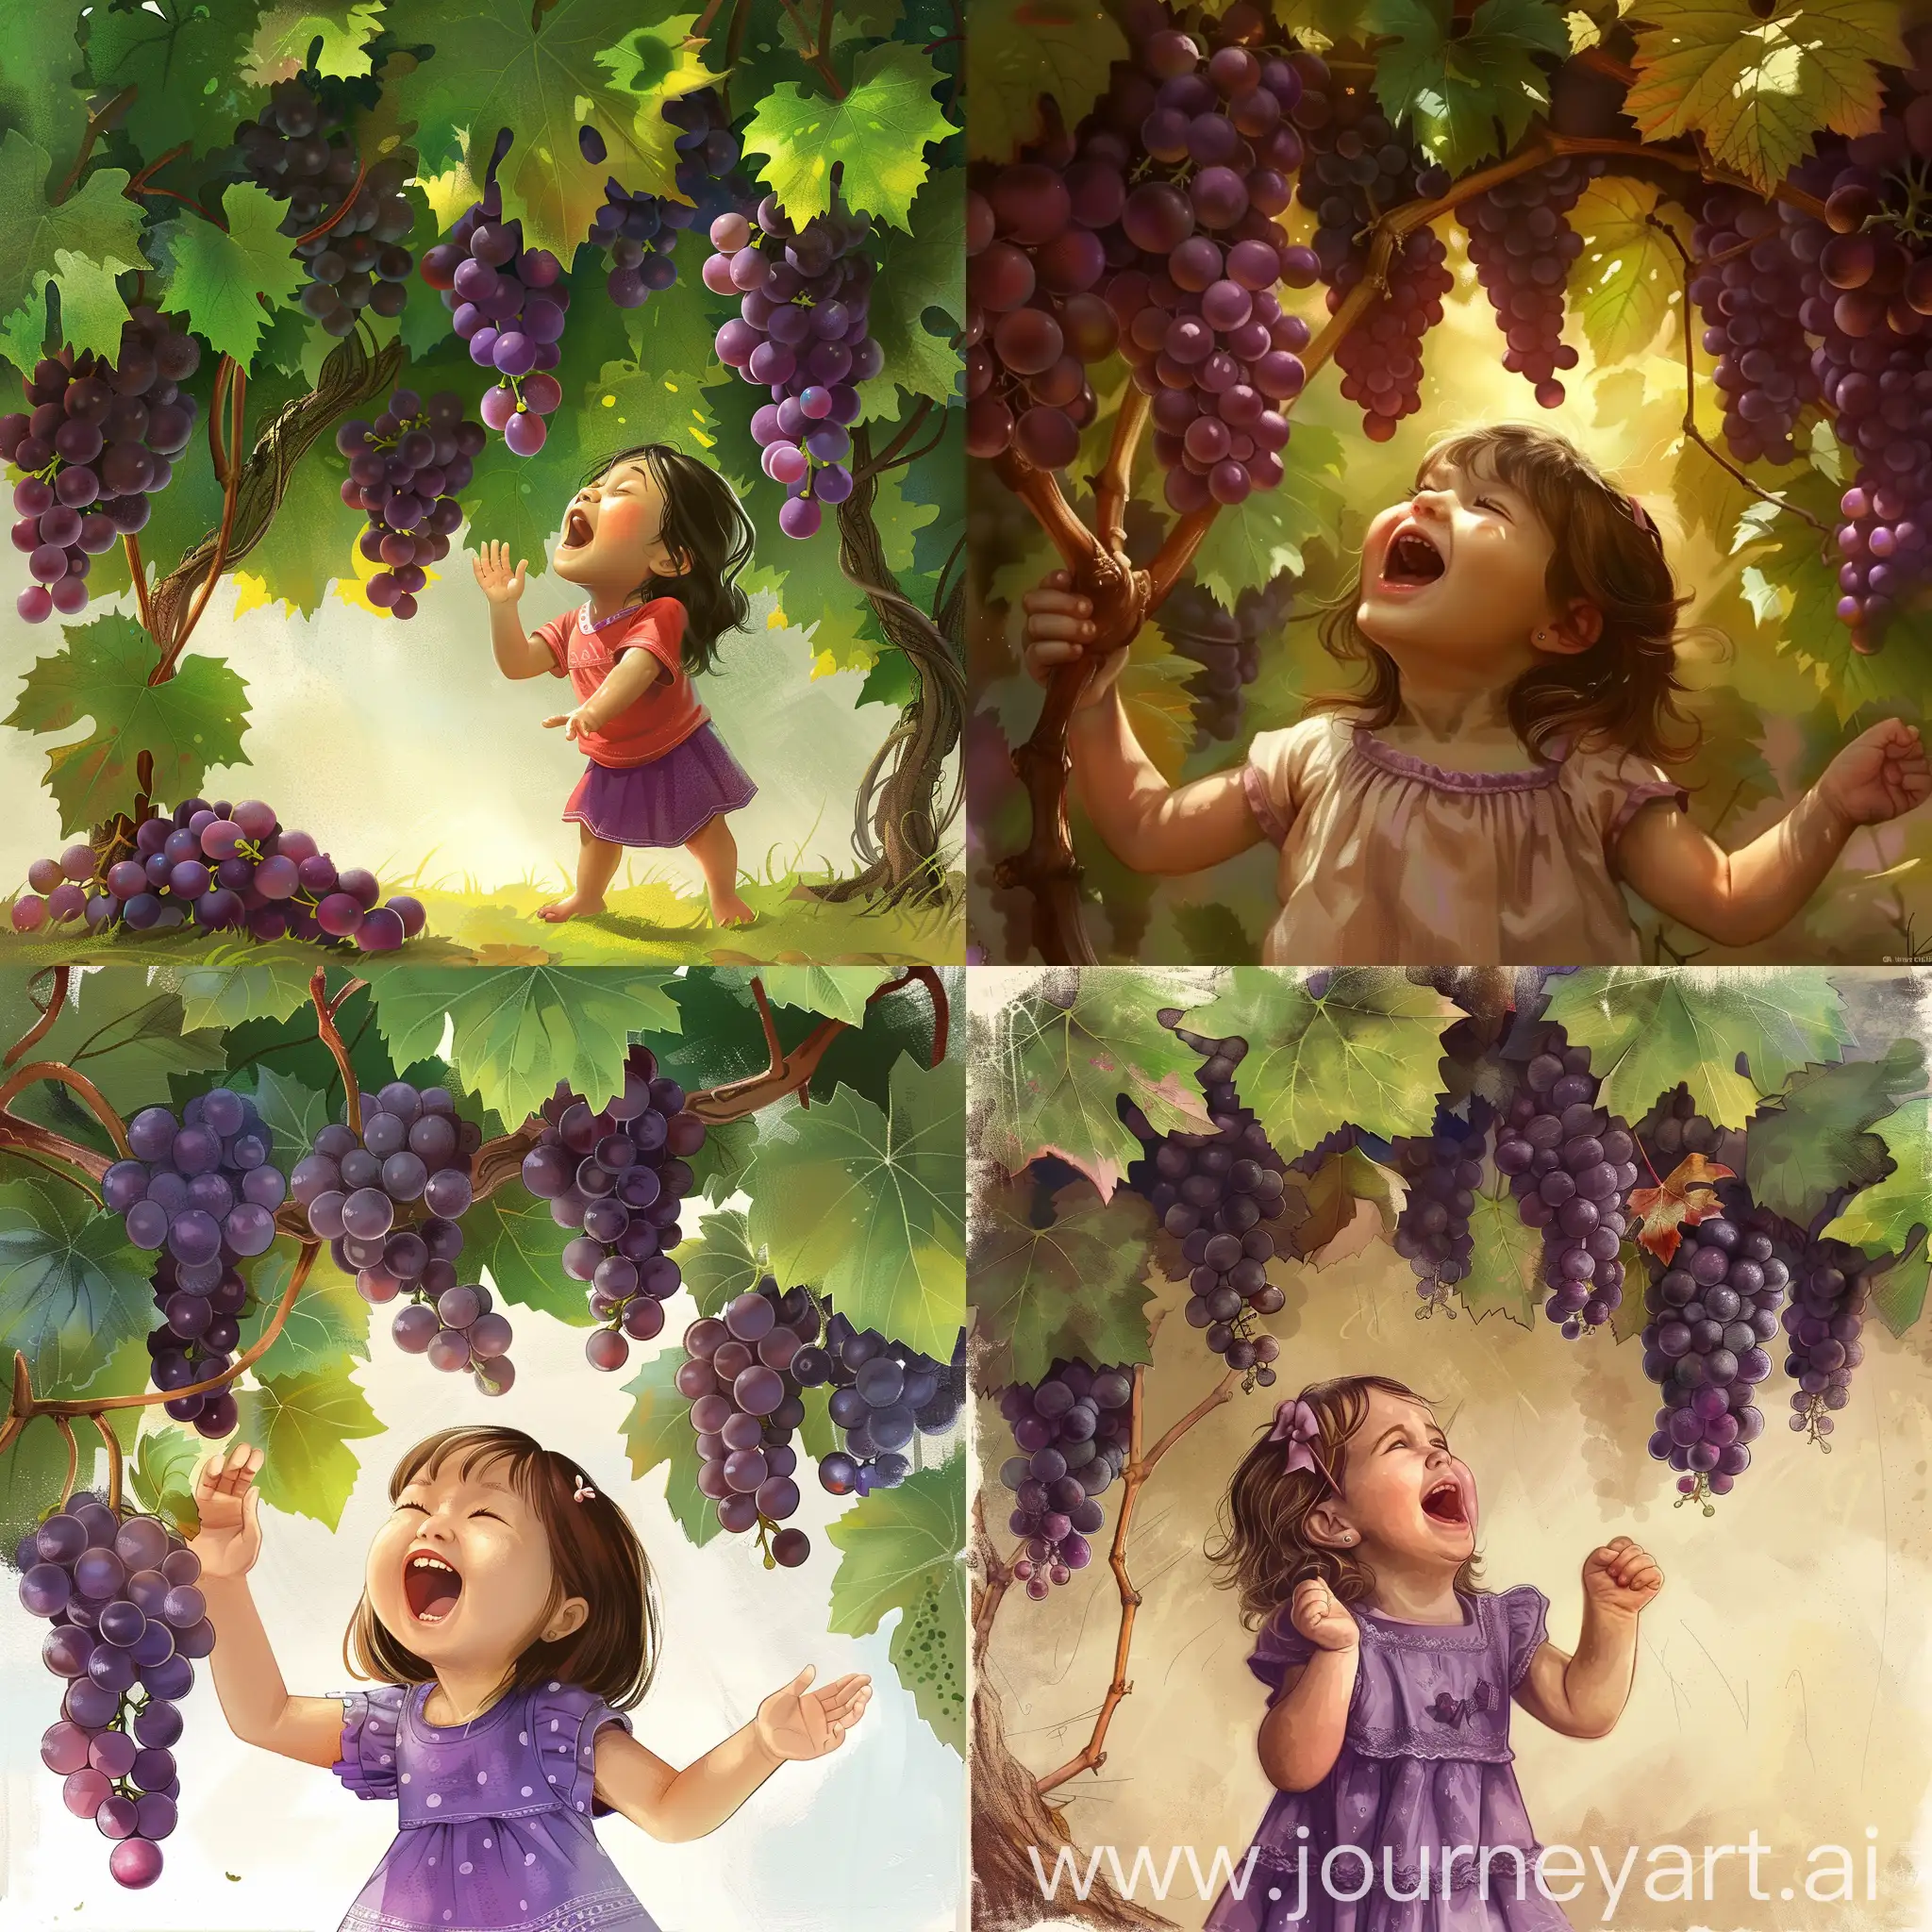 Joyful-Child-Singing-Beneath-a-Lush-Grape-Arbor